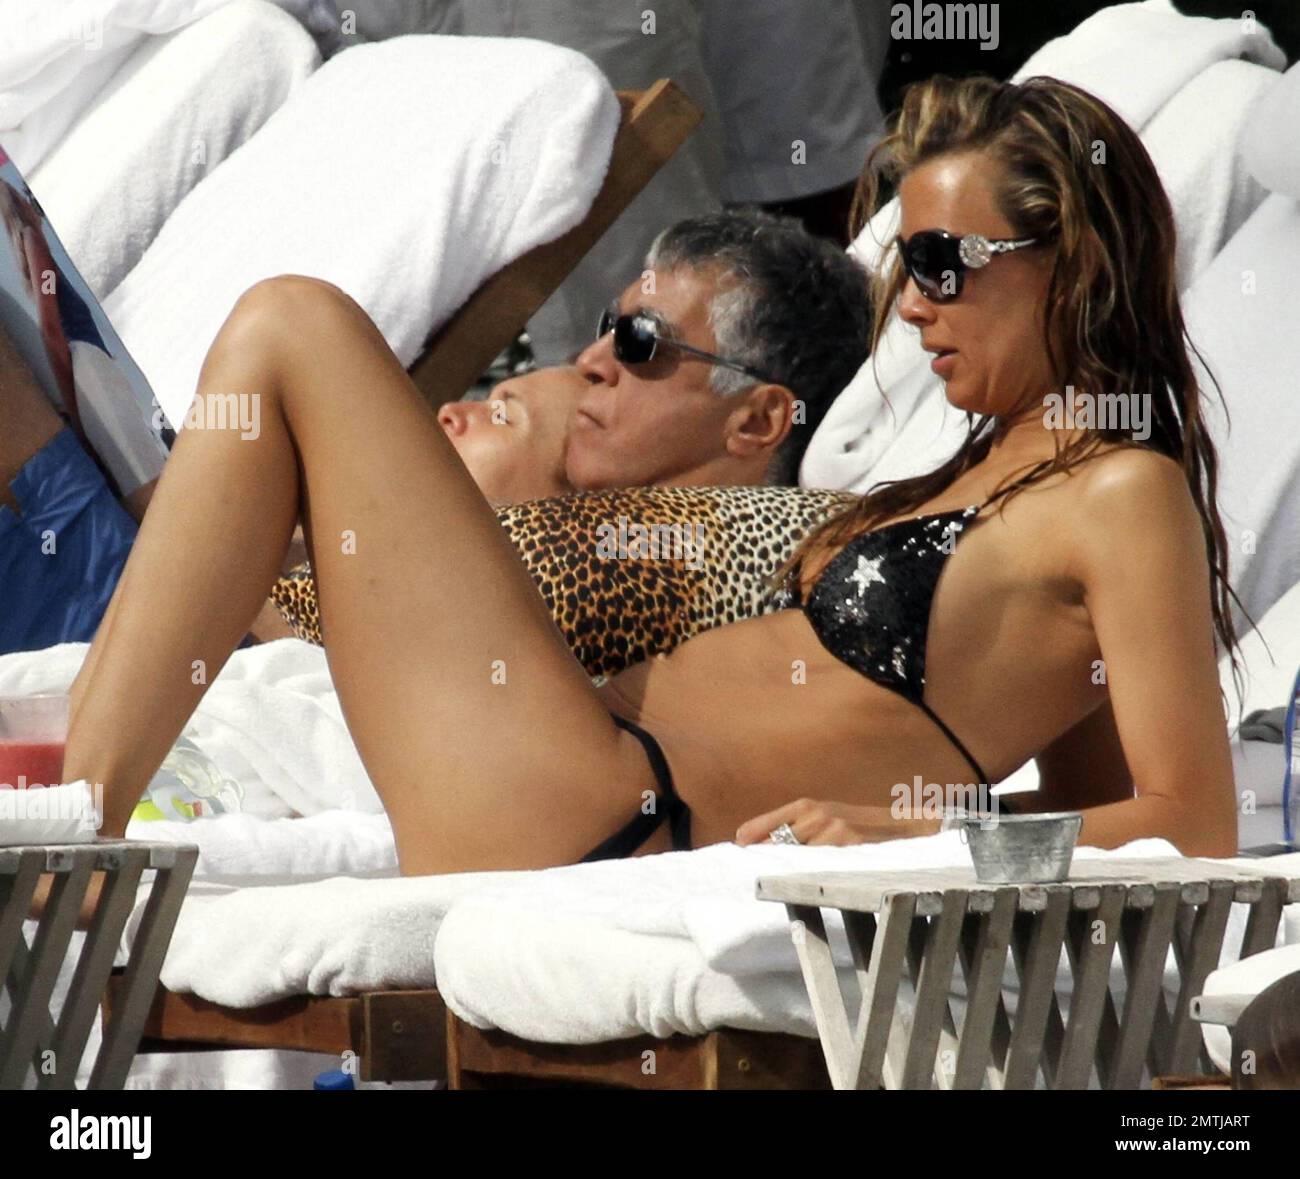 Tattooed Beauty Queen, Sarah Gerth, wife of German footballer Jermaine Jones, relaxes poolside at her luxury hotel in a star string bikini